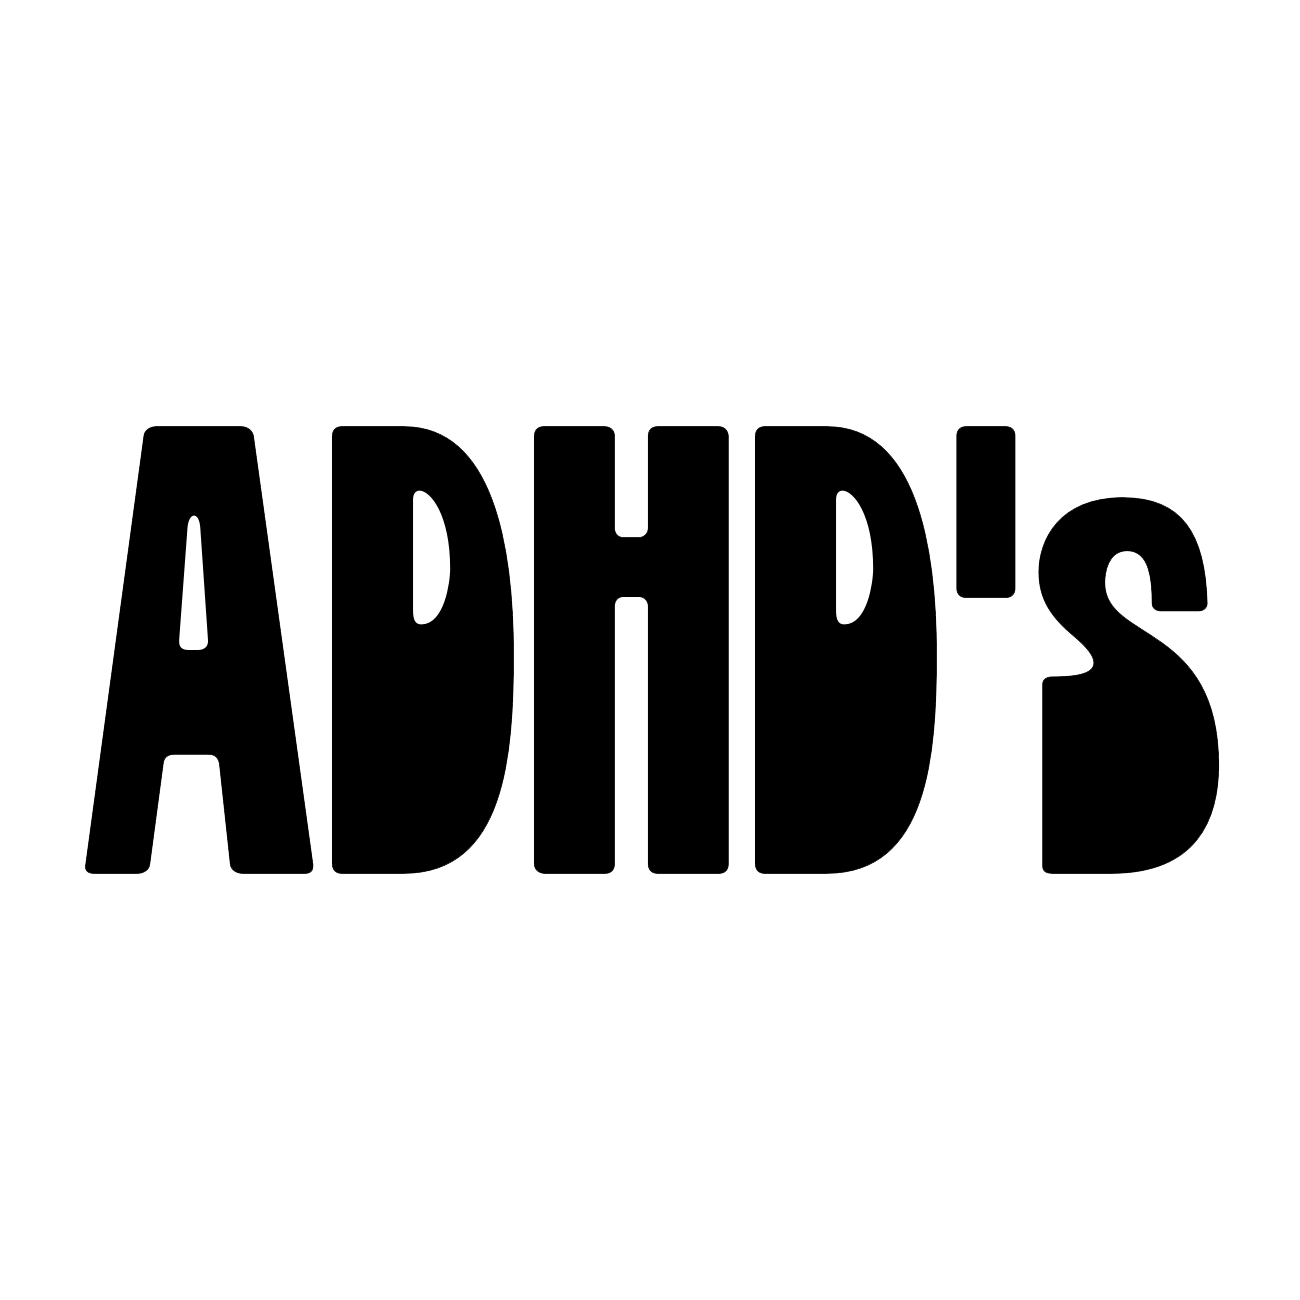 ADHD's